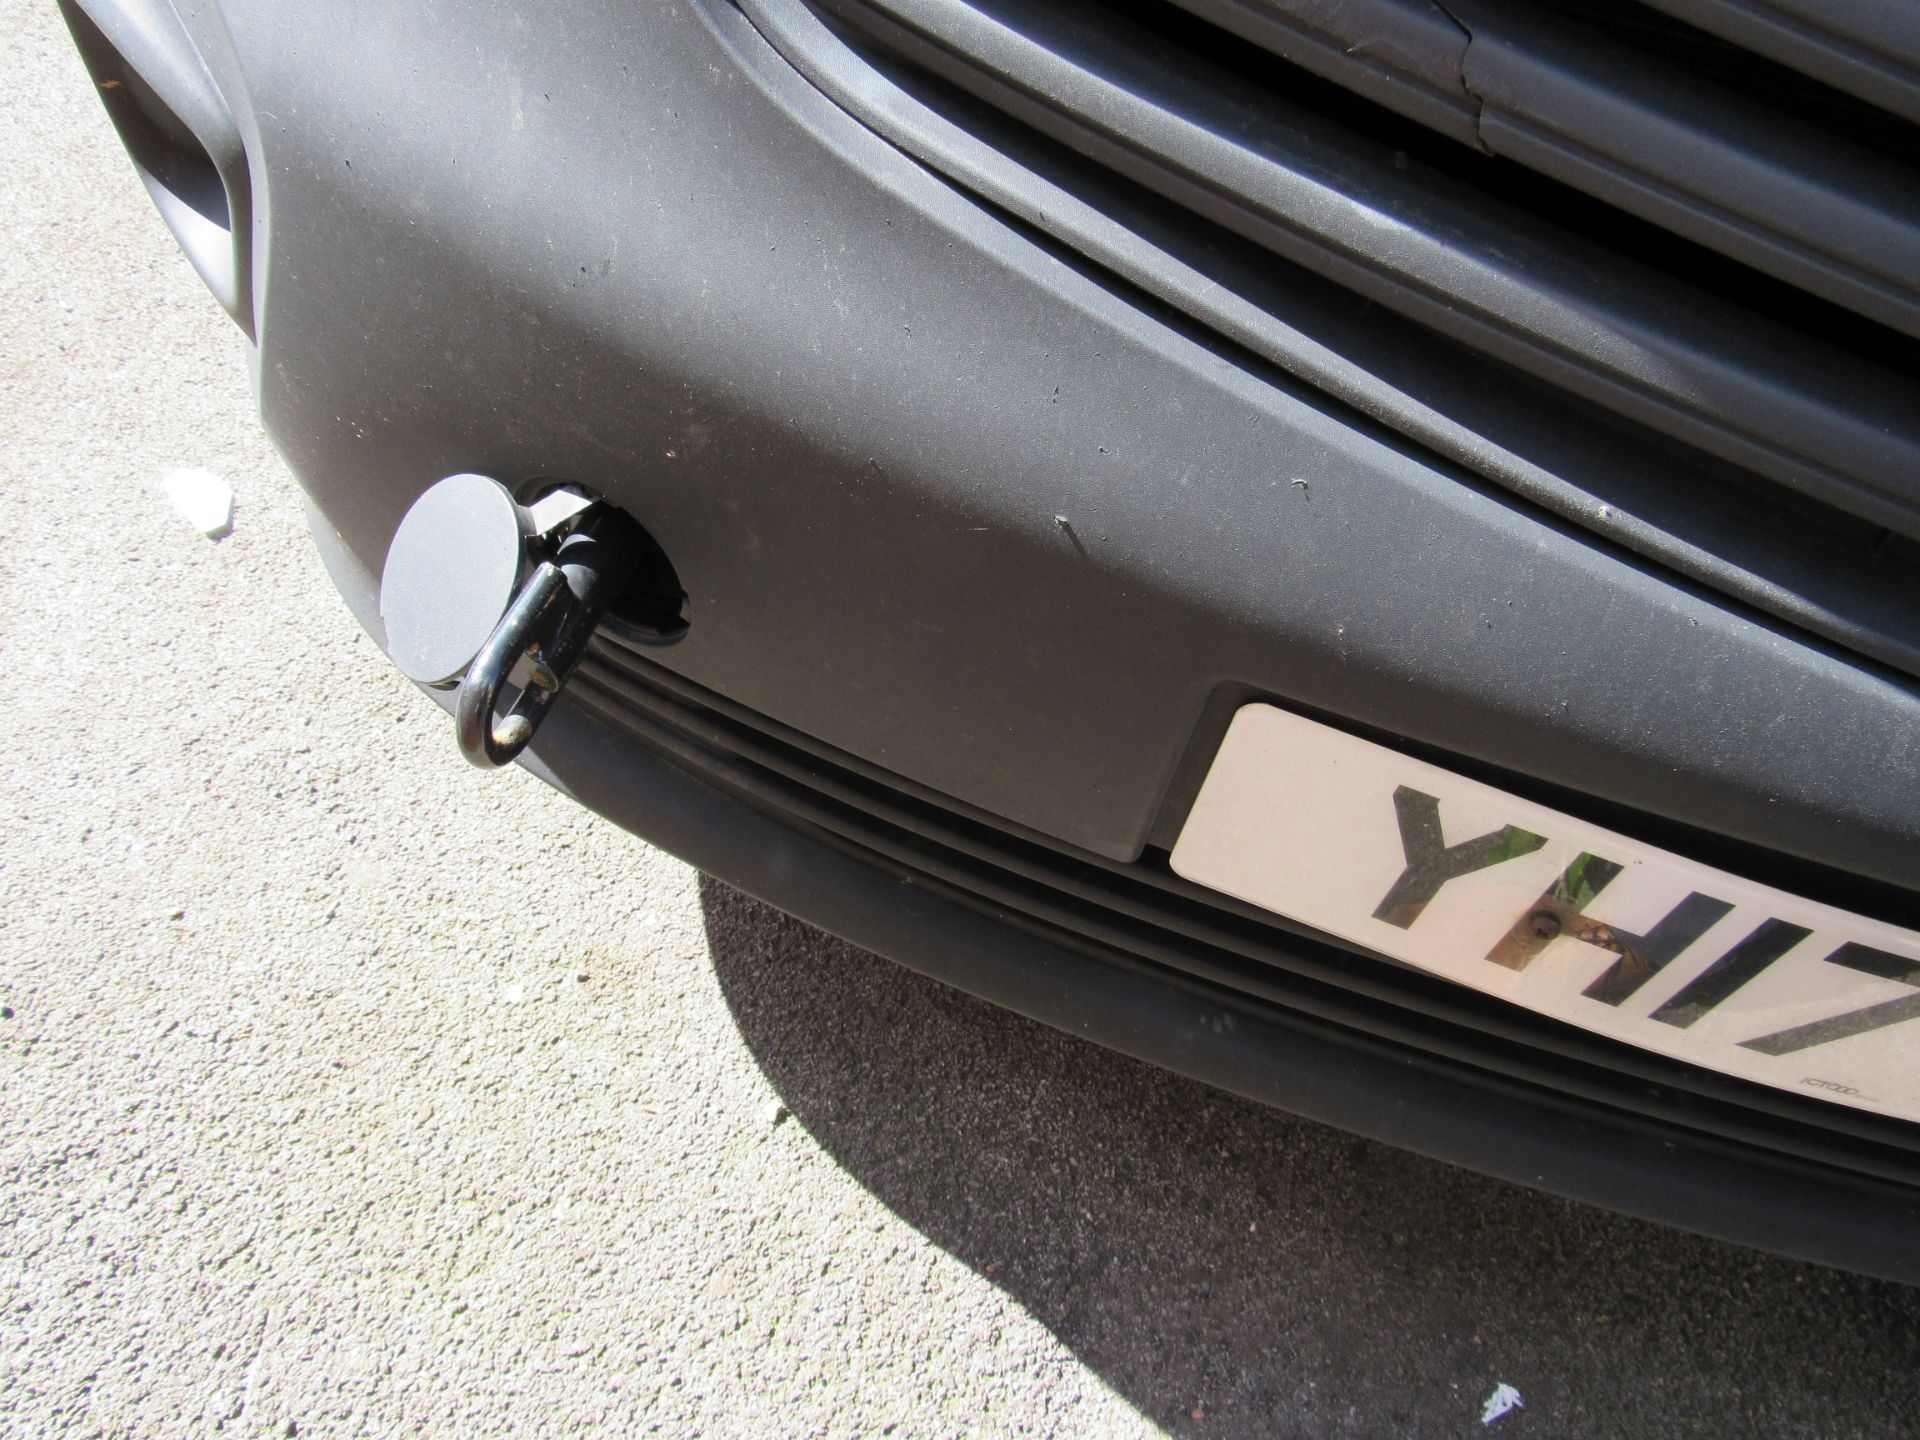 Vauxhall Vivaro van YH17 HKZ, Mileage unknown, non runner, Diesel, First Registered March 2017, - Image 6 of 7